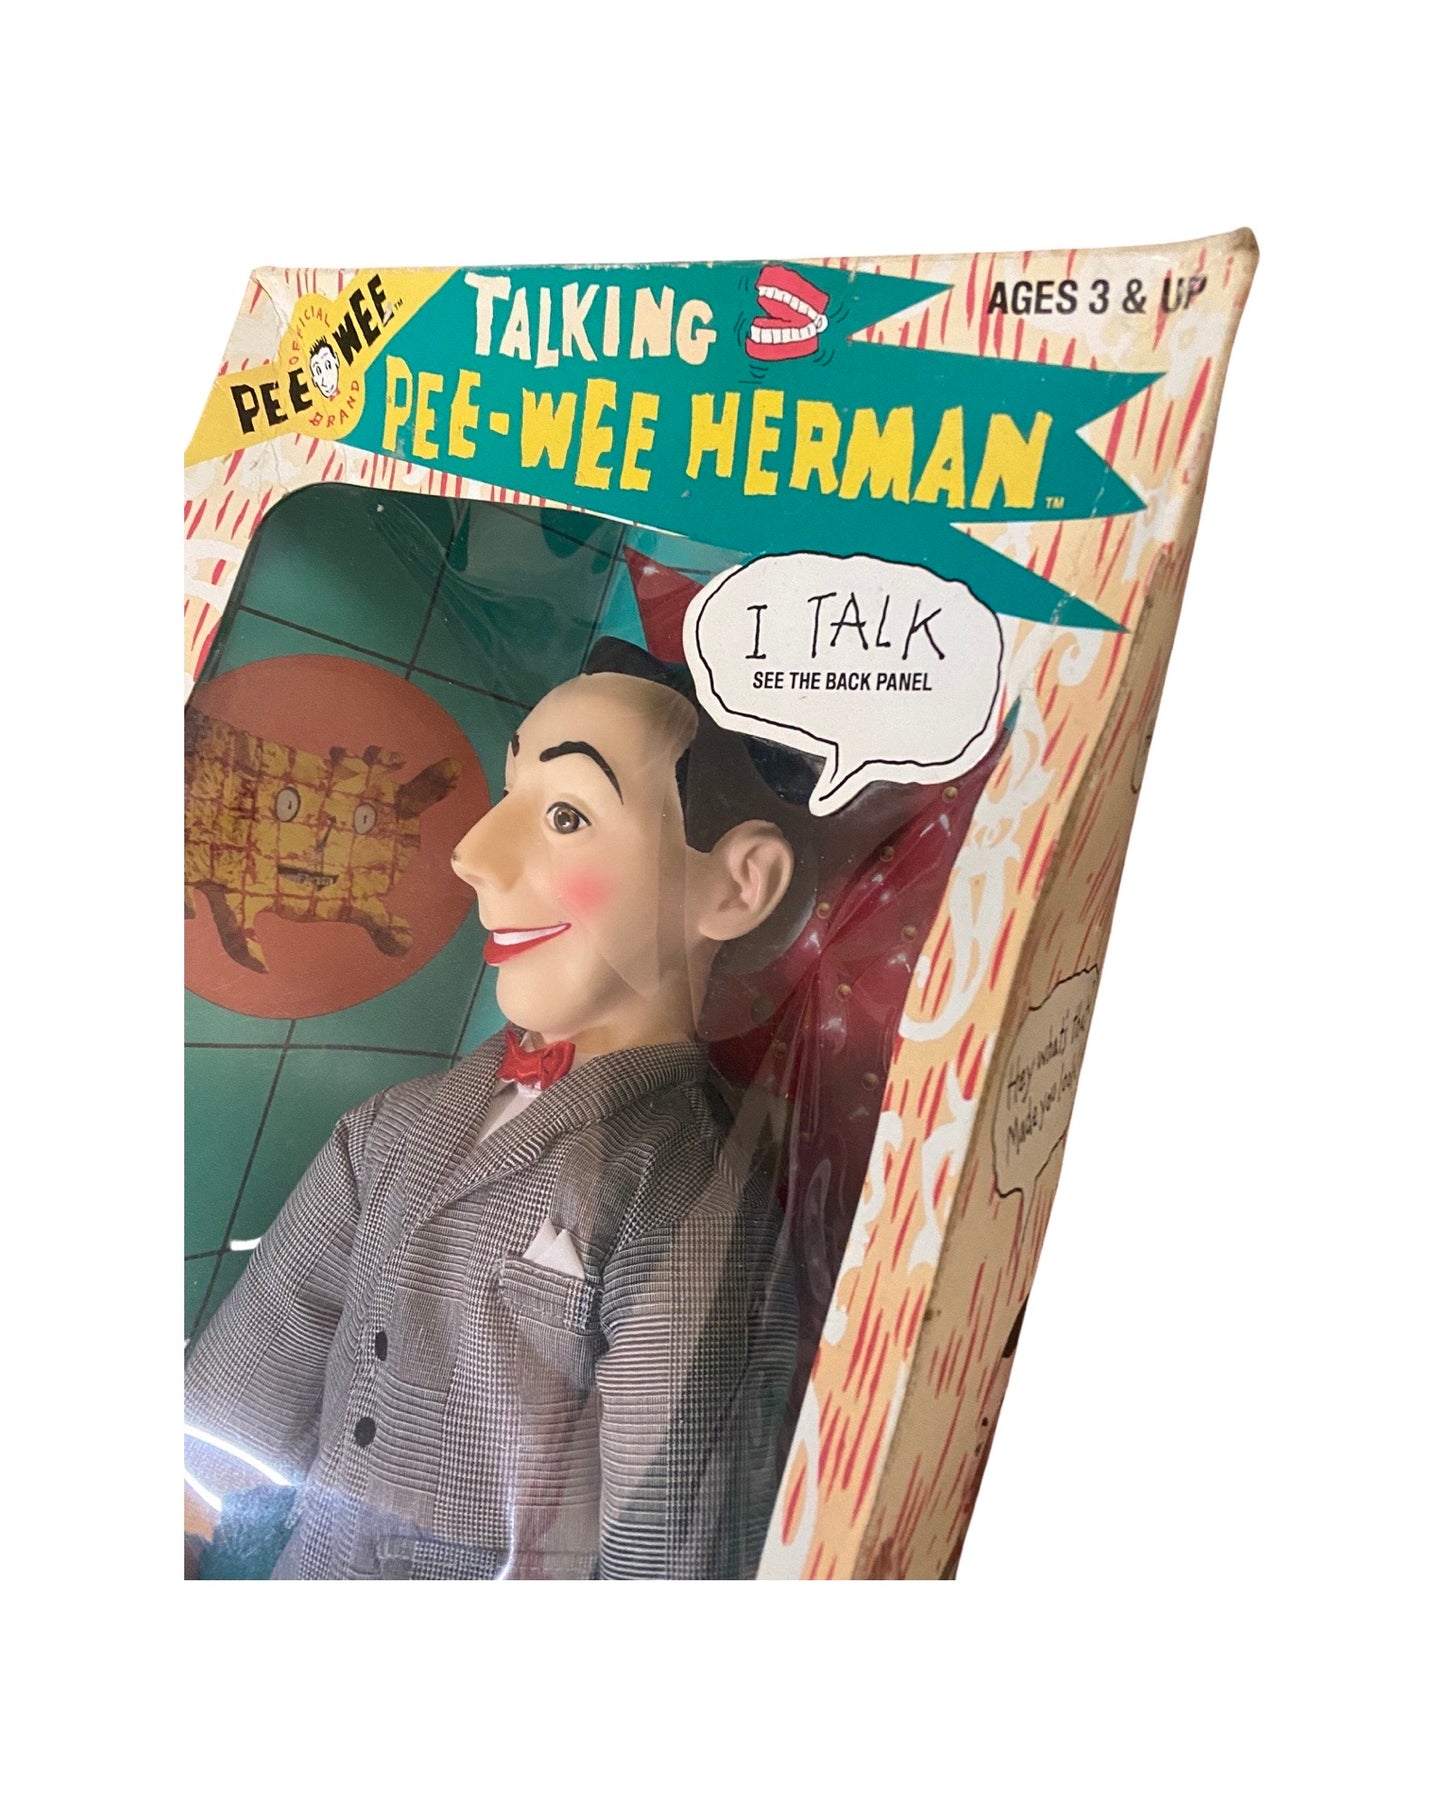 1987 Matchbox Talking Pee-Wee Herman